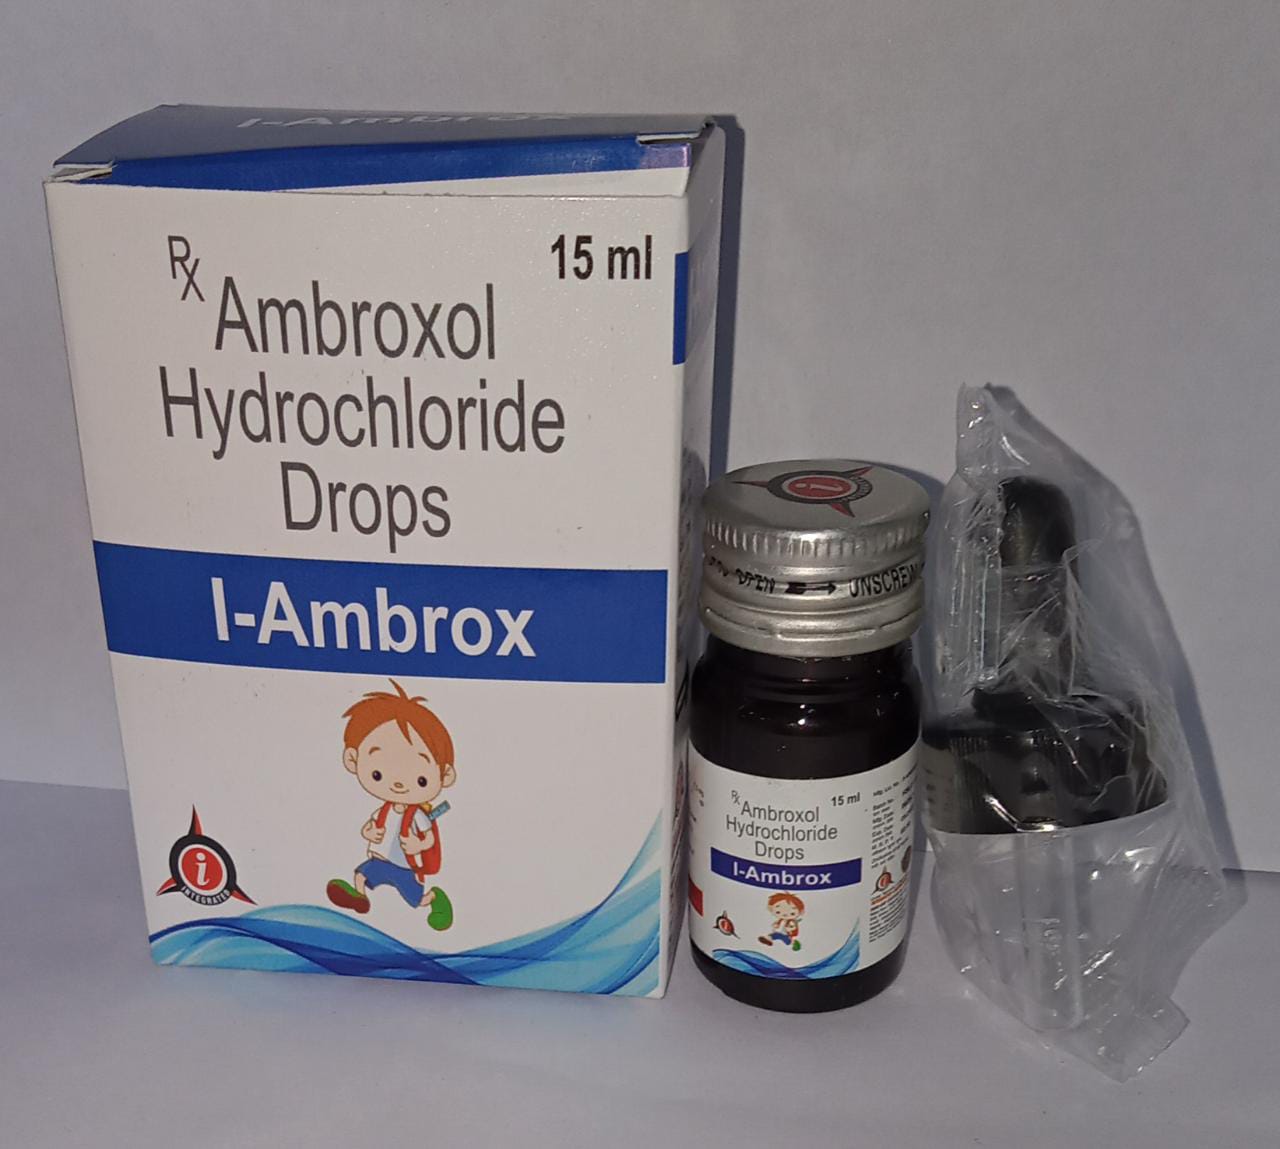 Ambroxol Hydrochloride (I-Ambrox)